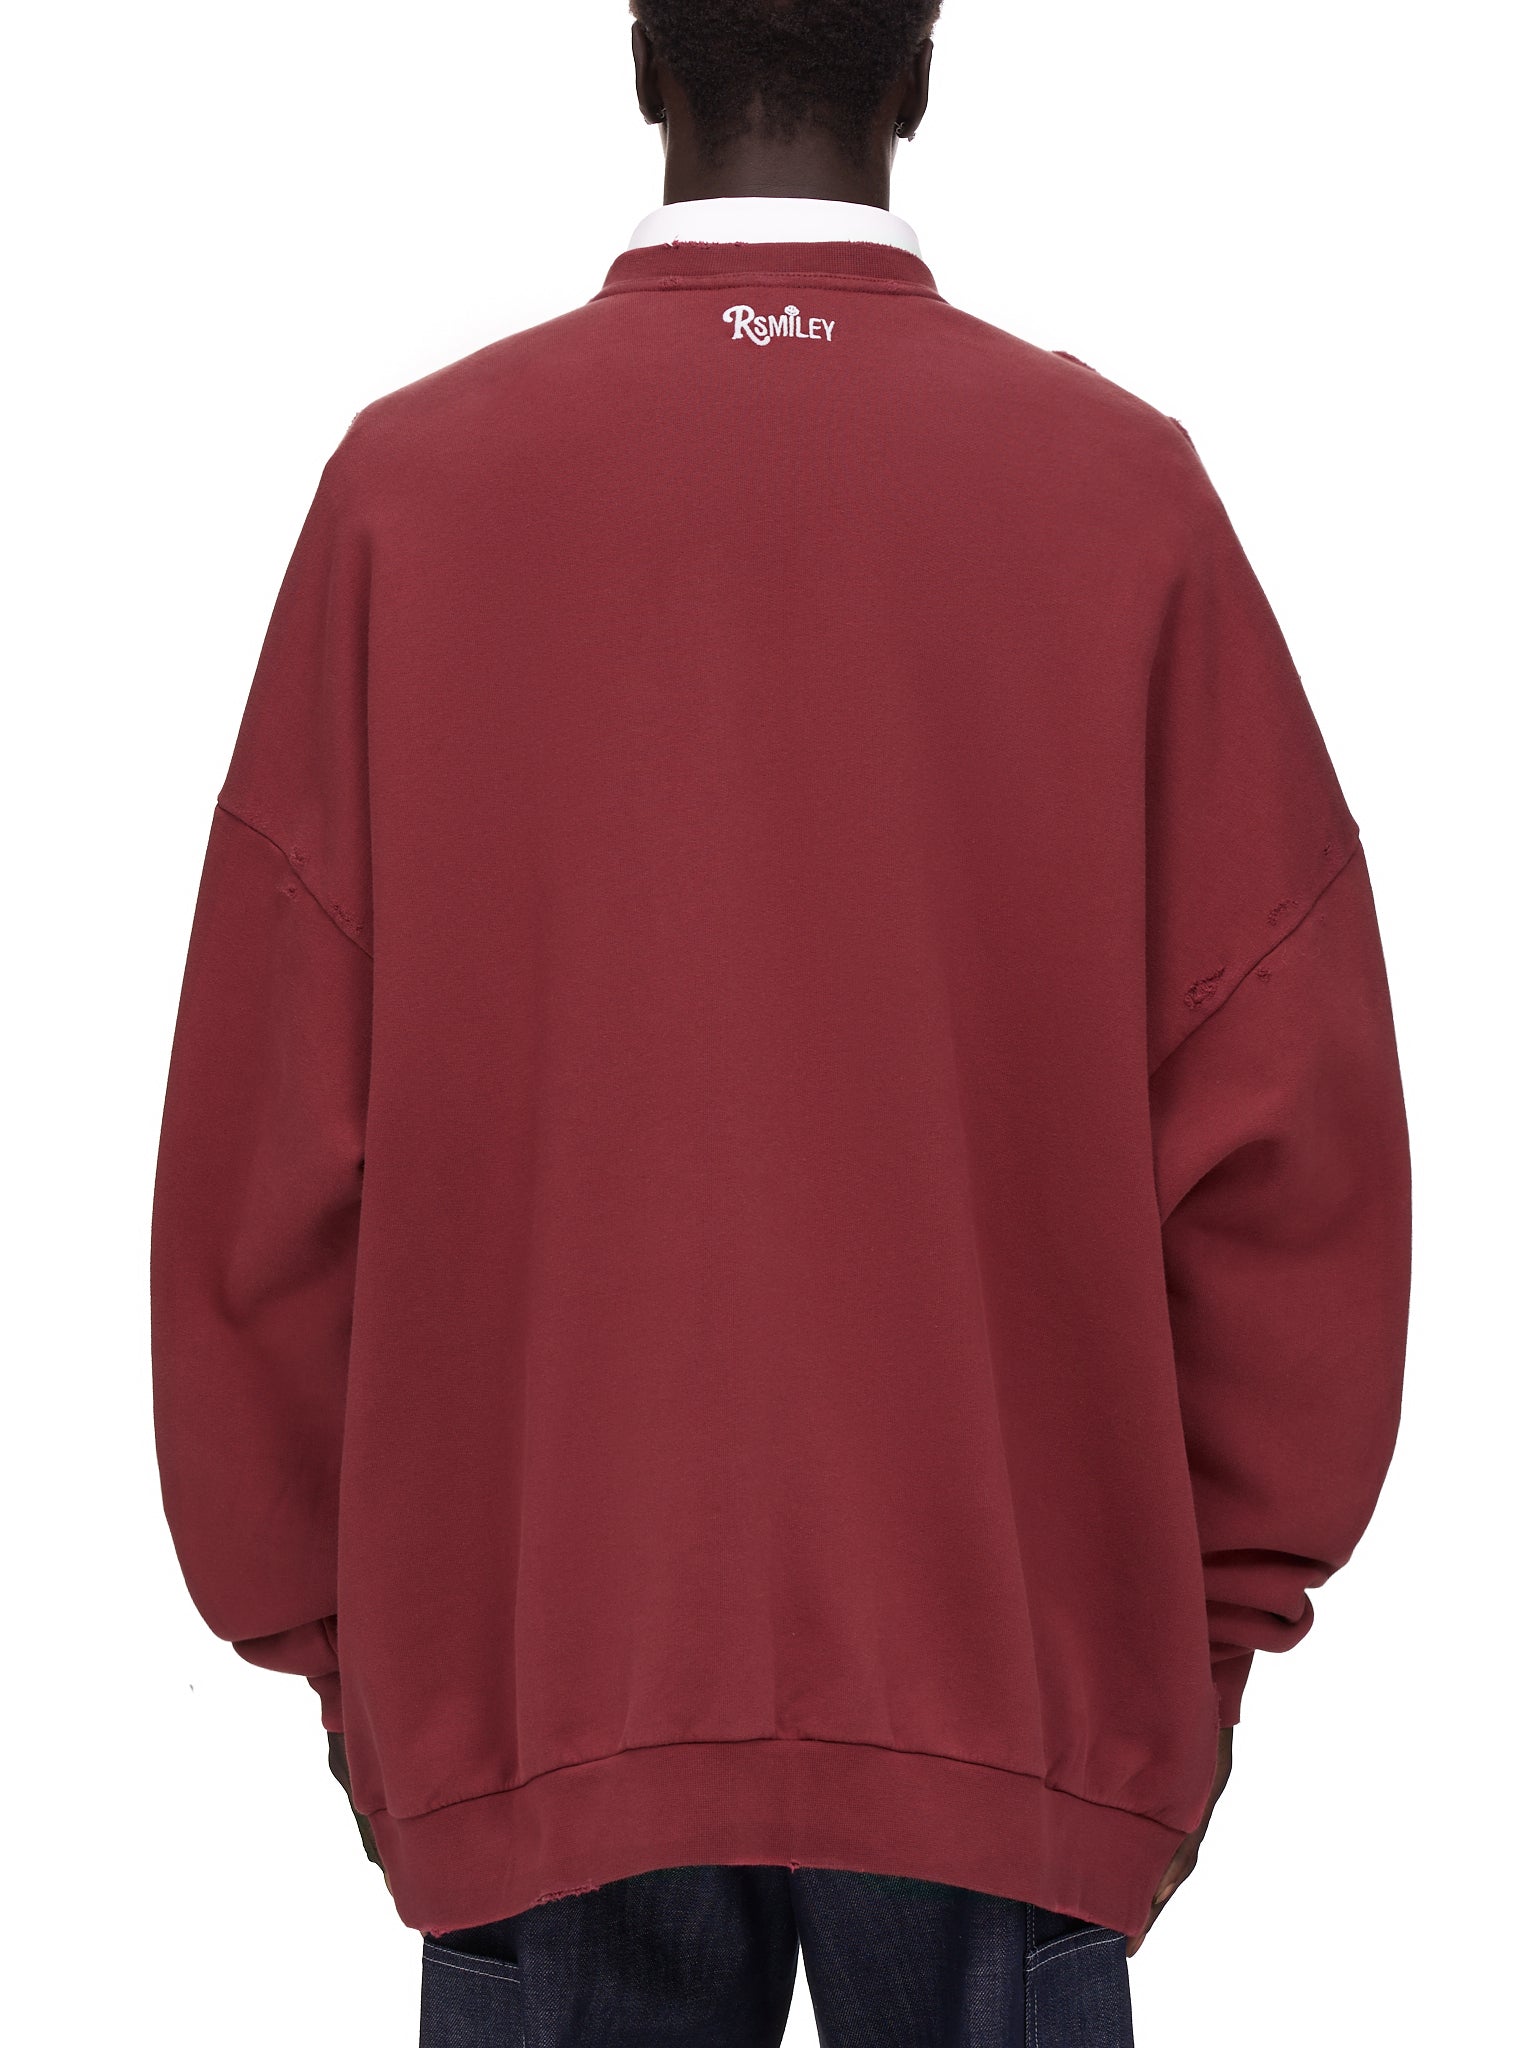 Raf Simons x Smiley College Smiley Sweatshirt | H. Lorenzo - back